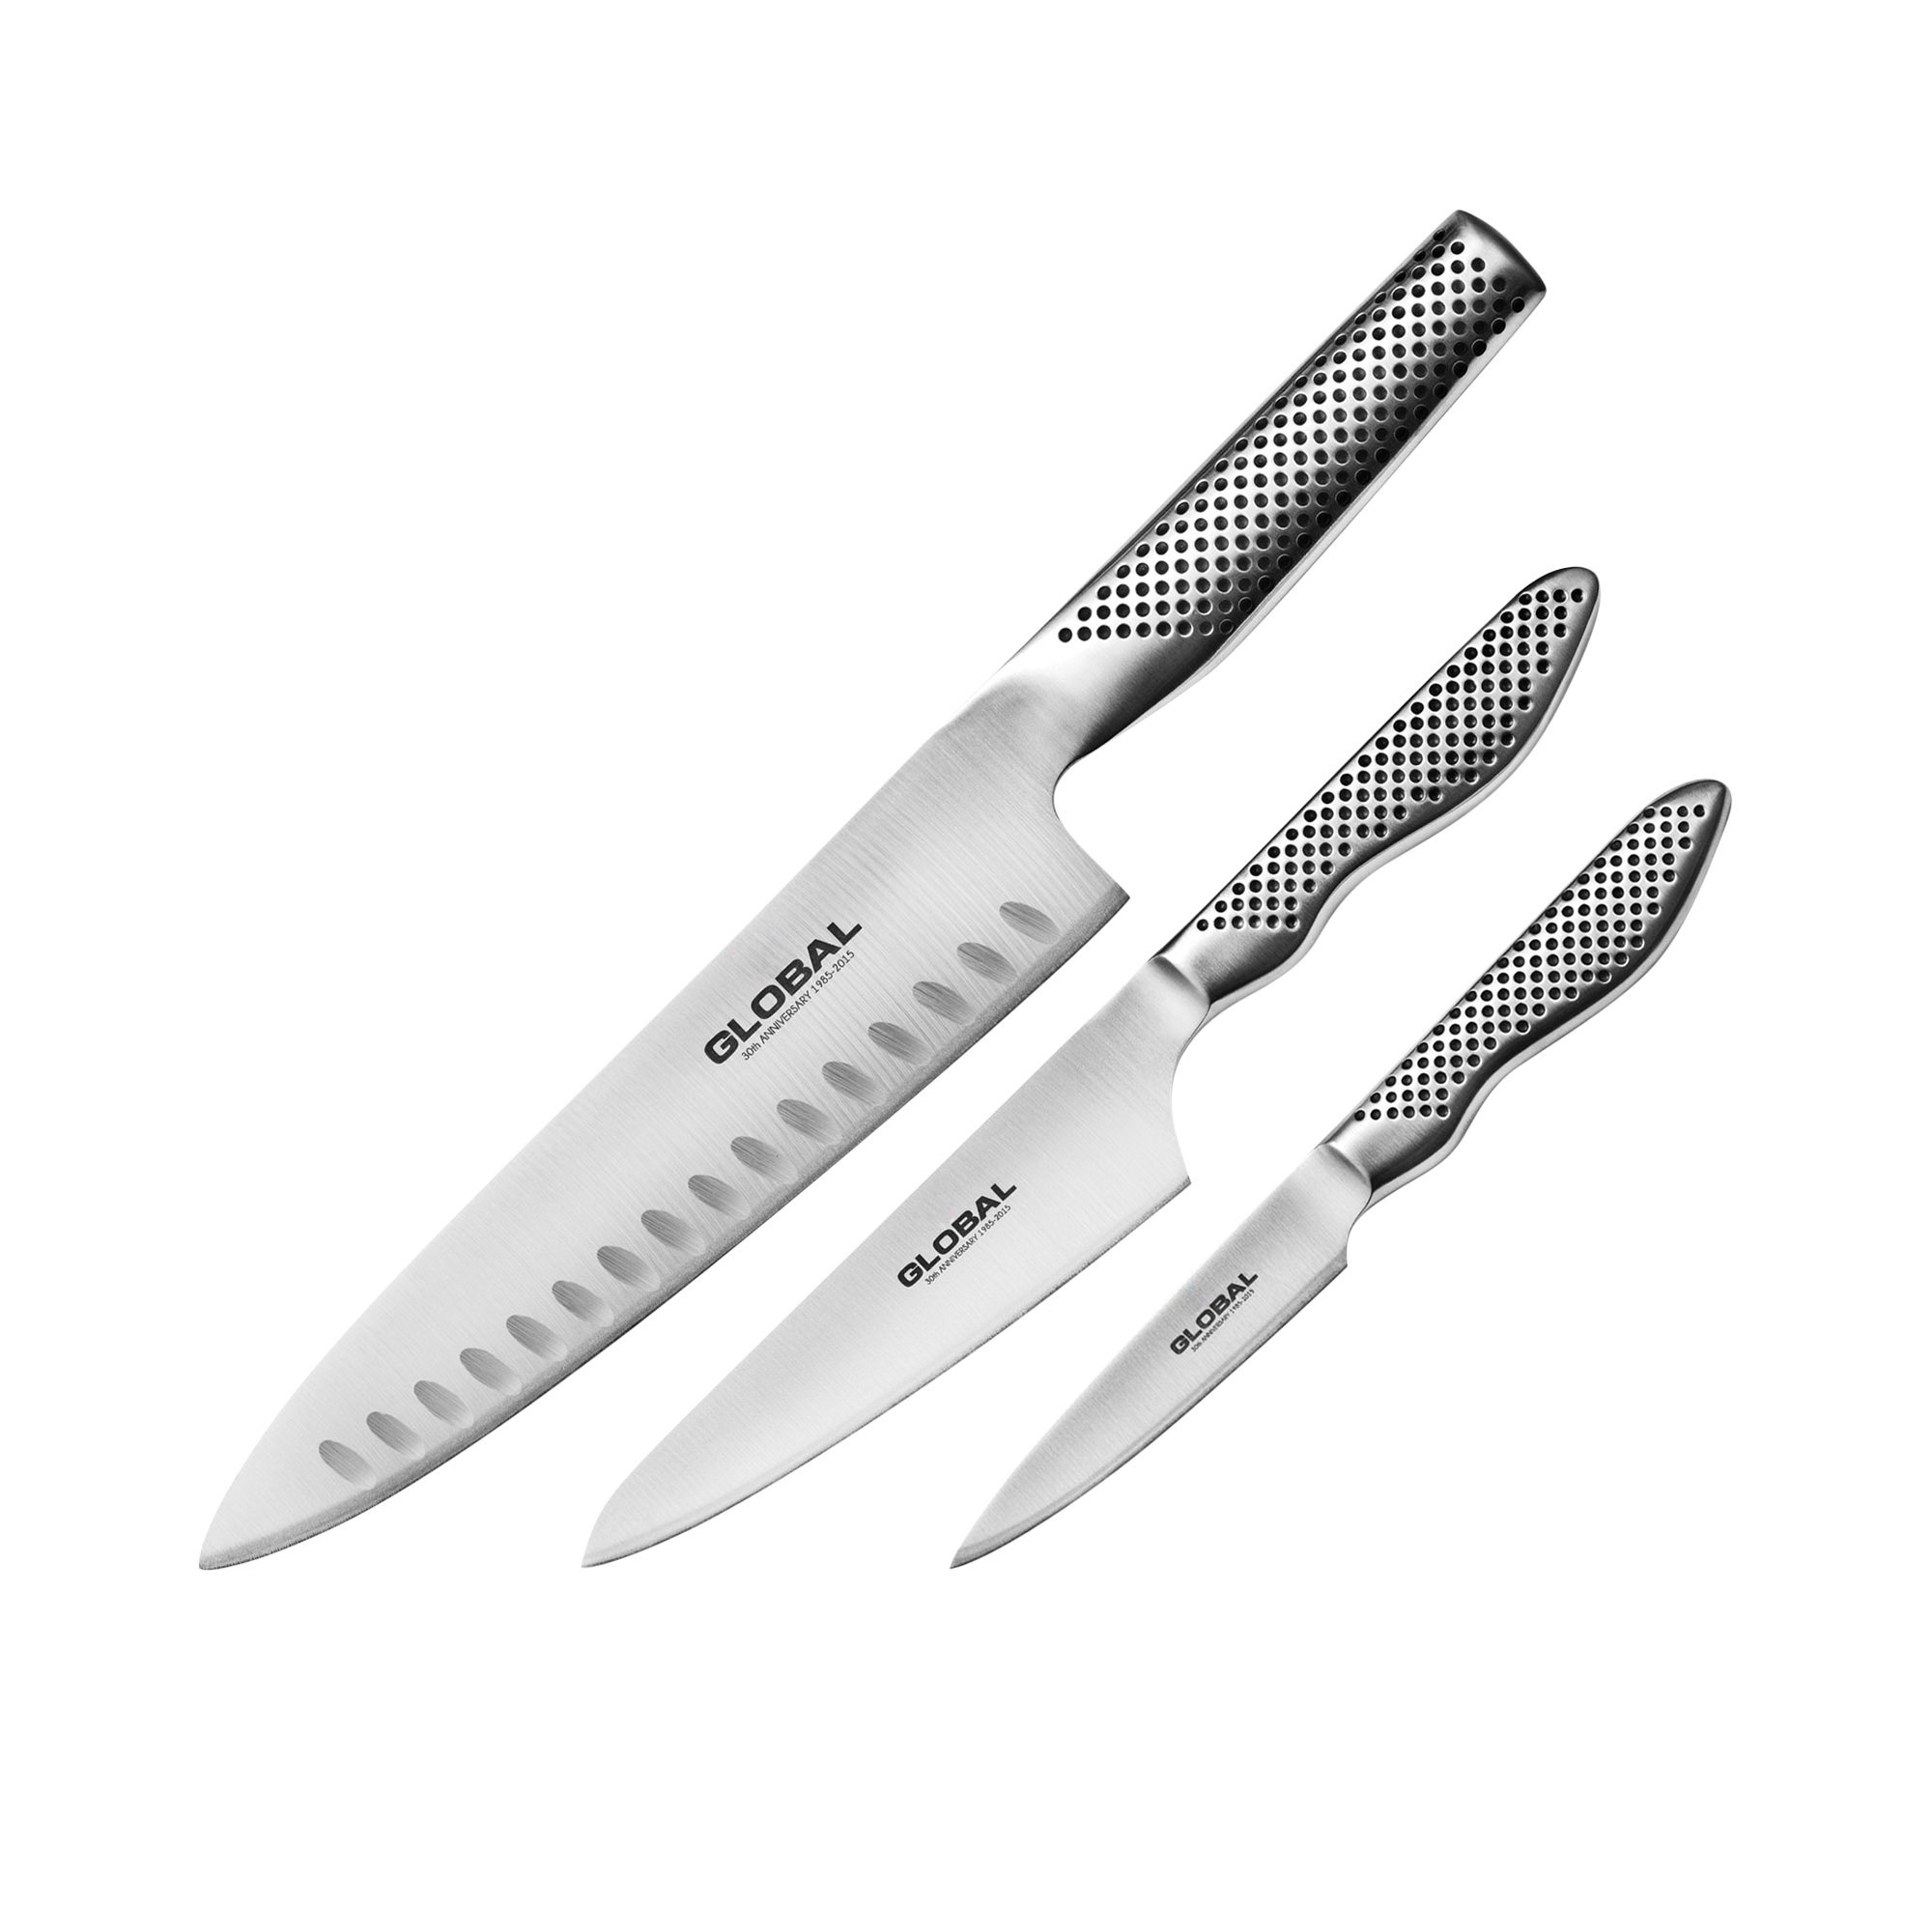 Global 3pc Knife Set Image 1